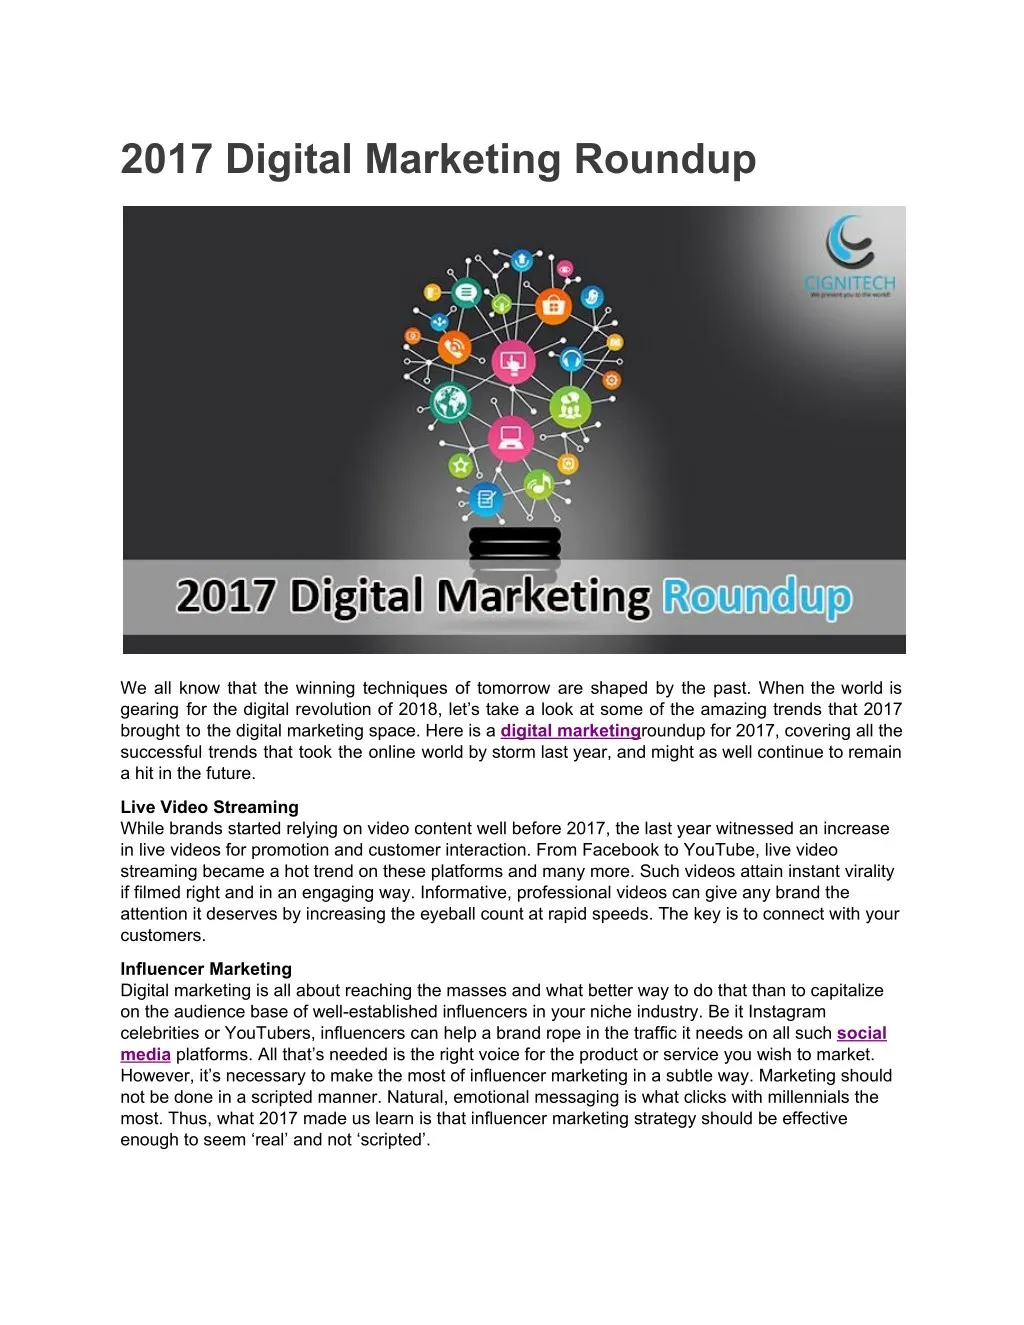 2017 digital marketing roundup